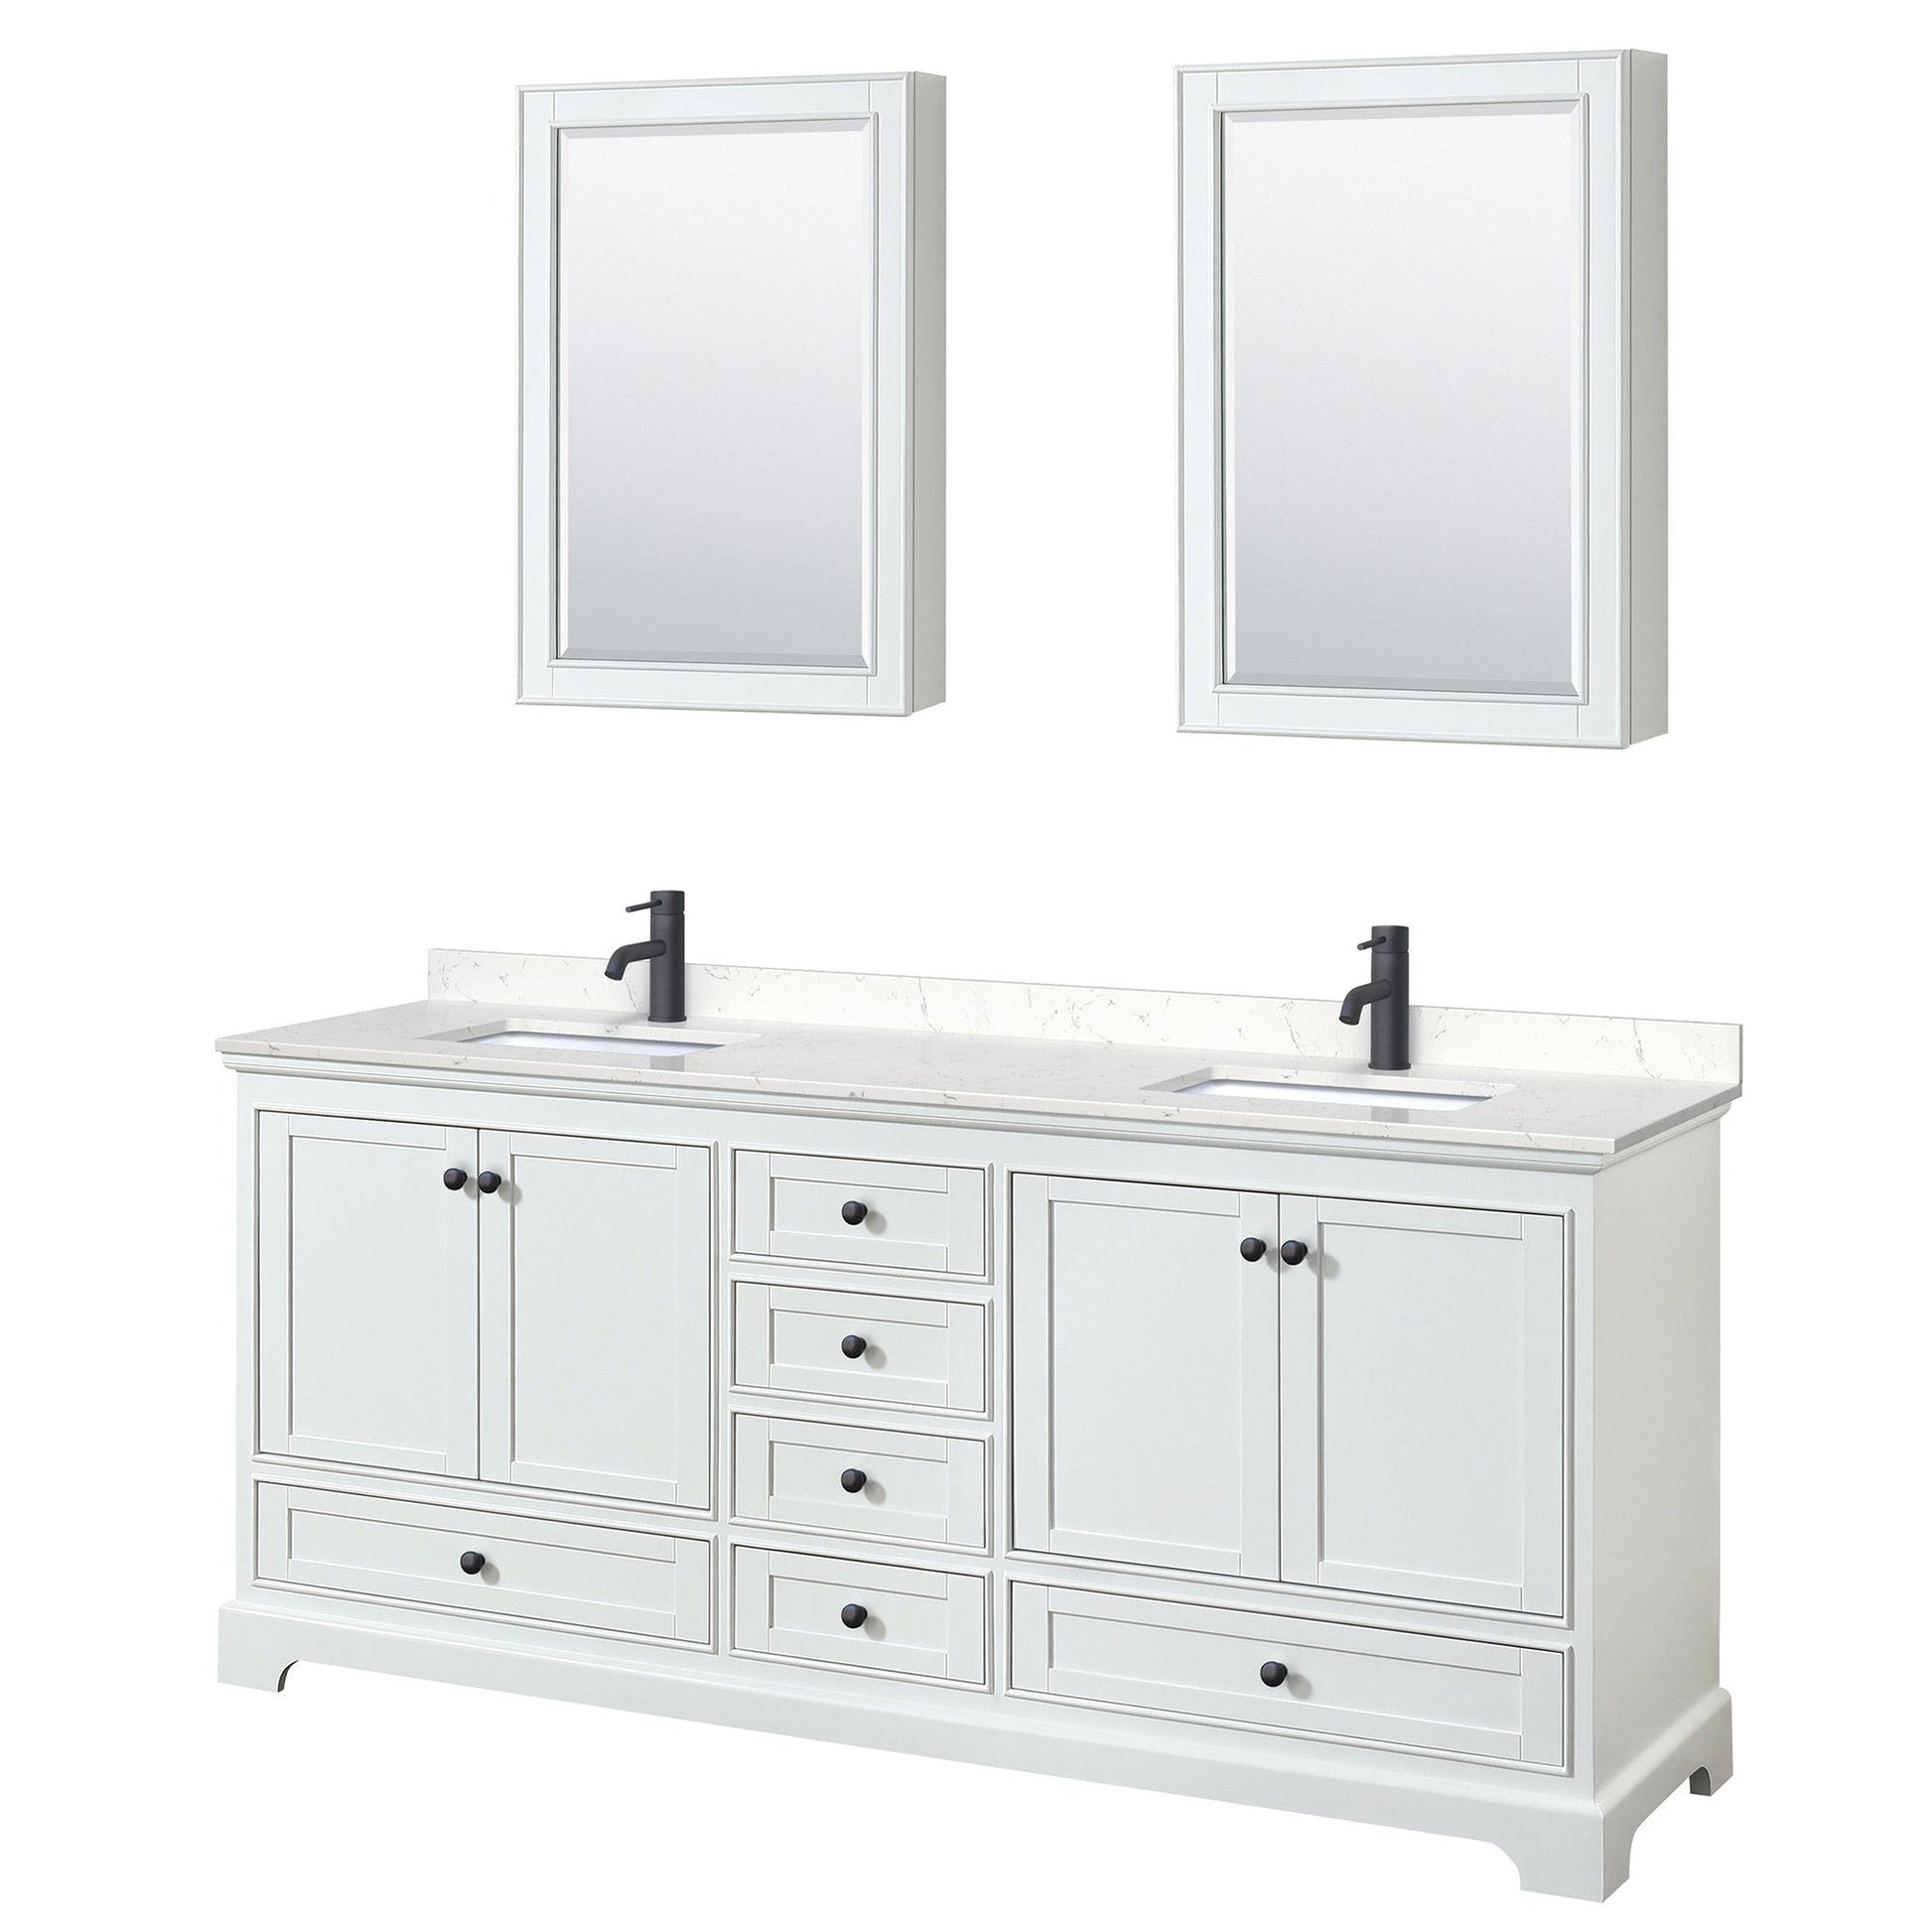 Deborah 80" Double Bathroom Vanity in White, Carrara Cultured Marble Countertop, Undermount Square Sinks, Matte Black Trim, Medicine Cabinets